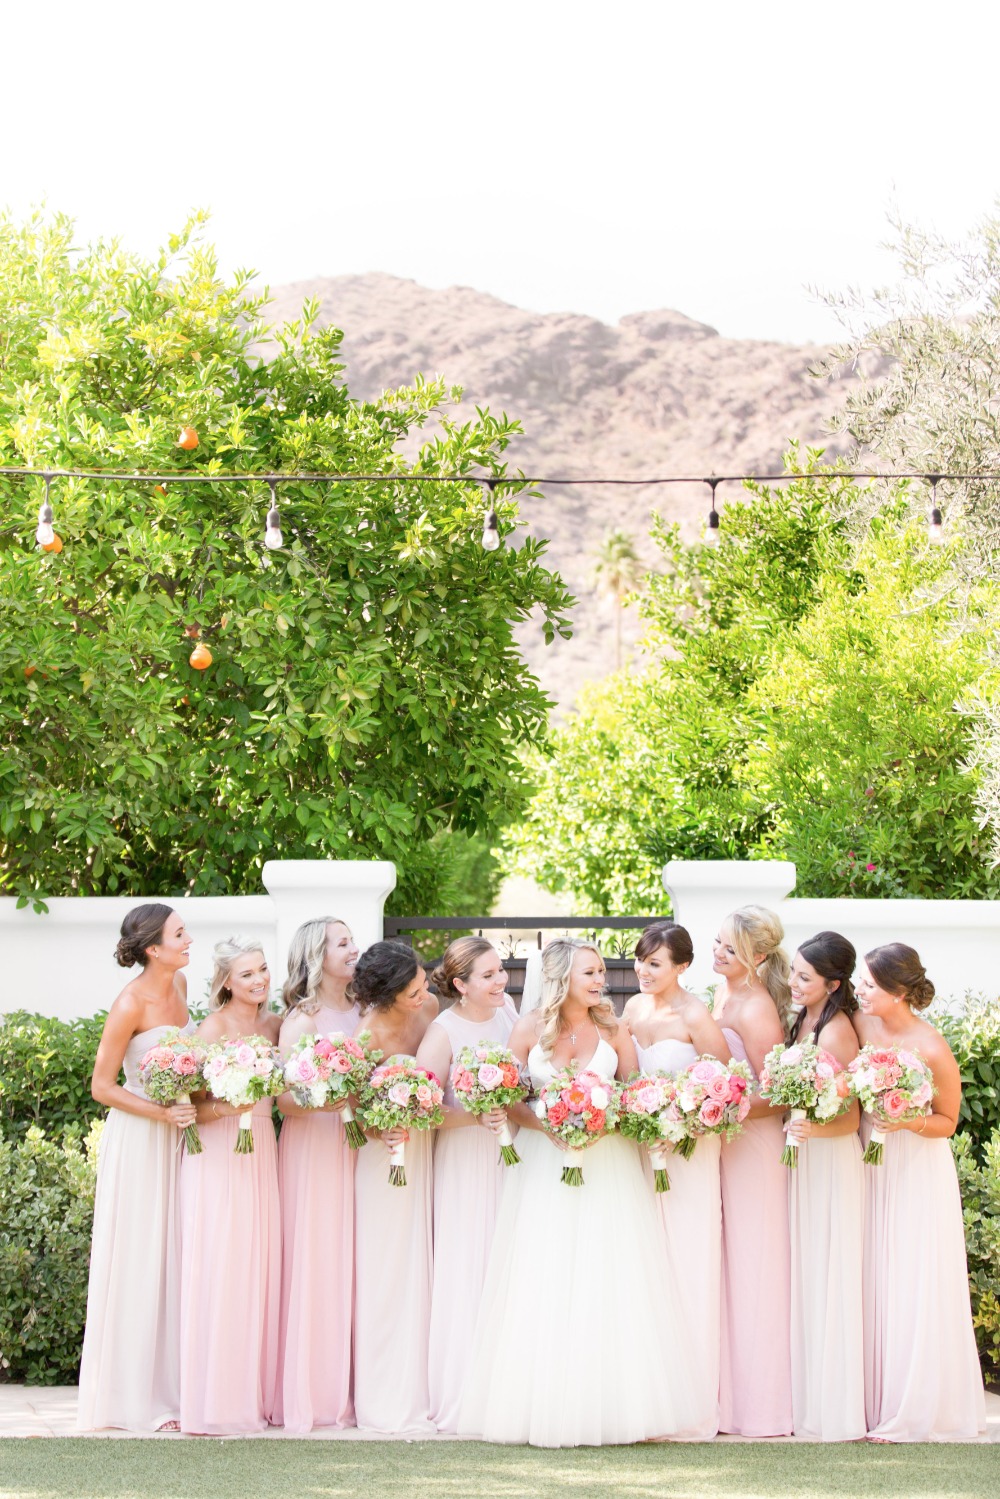 Bridesmaids in shades of blush